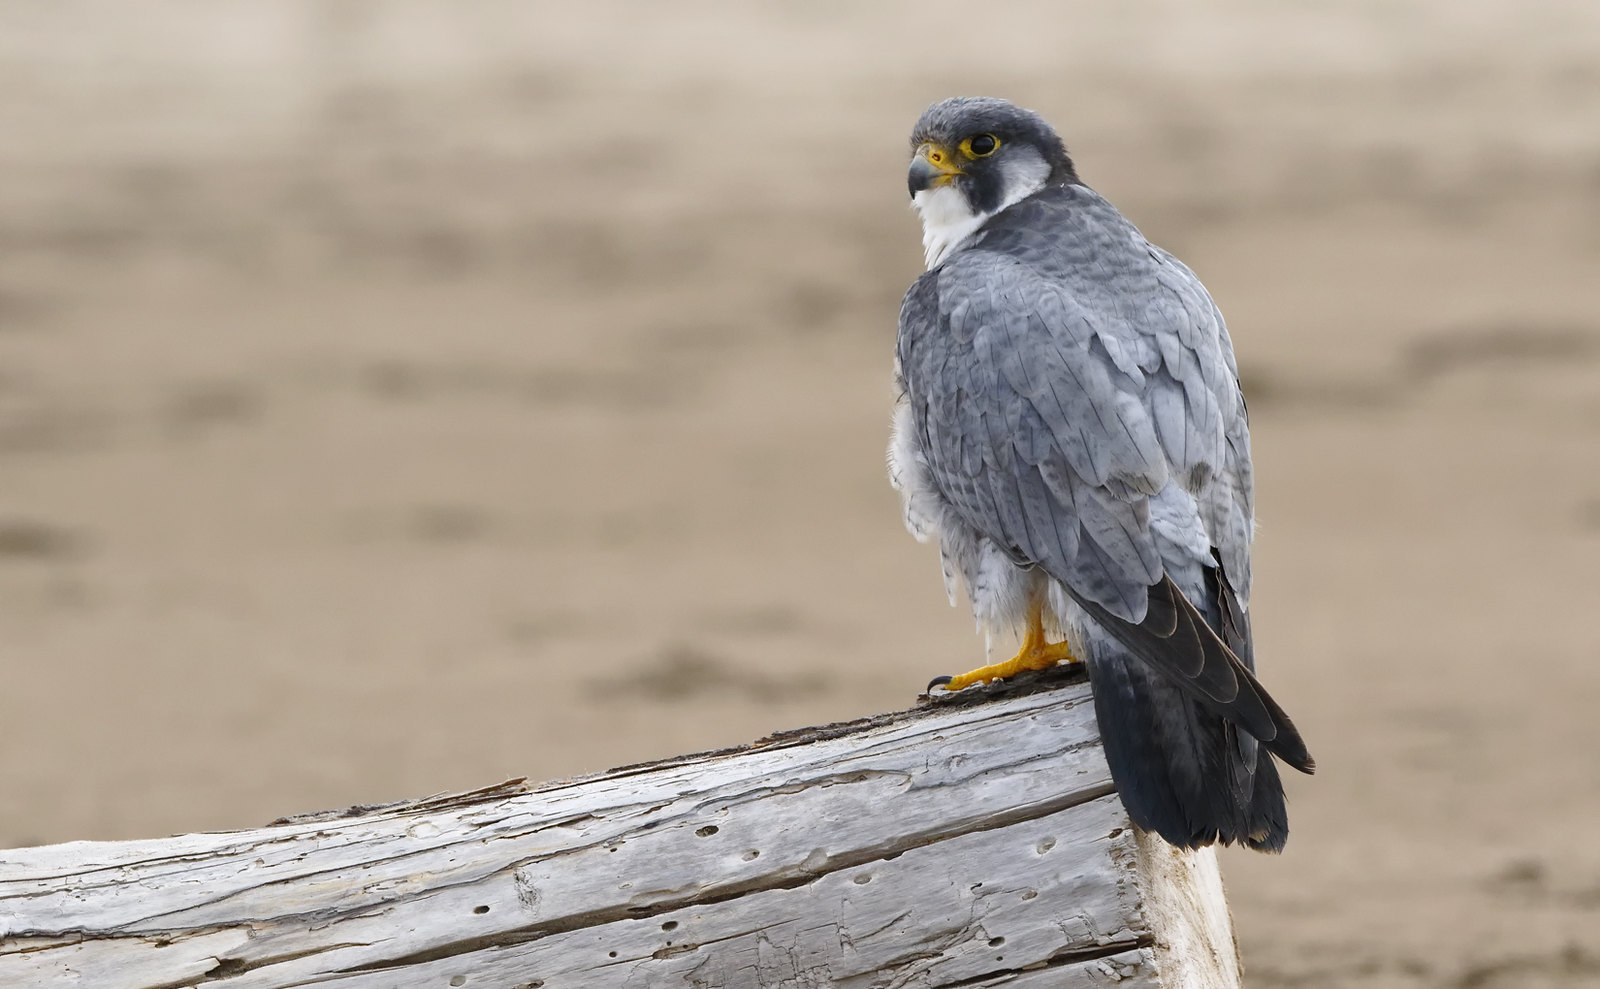 A very obliging Peregrine Falcon